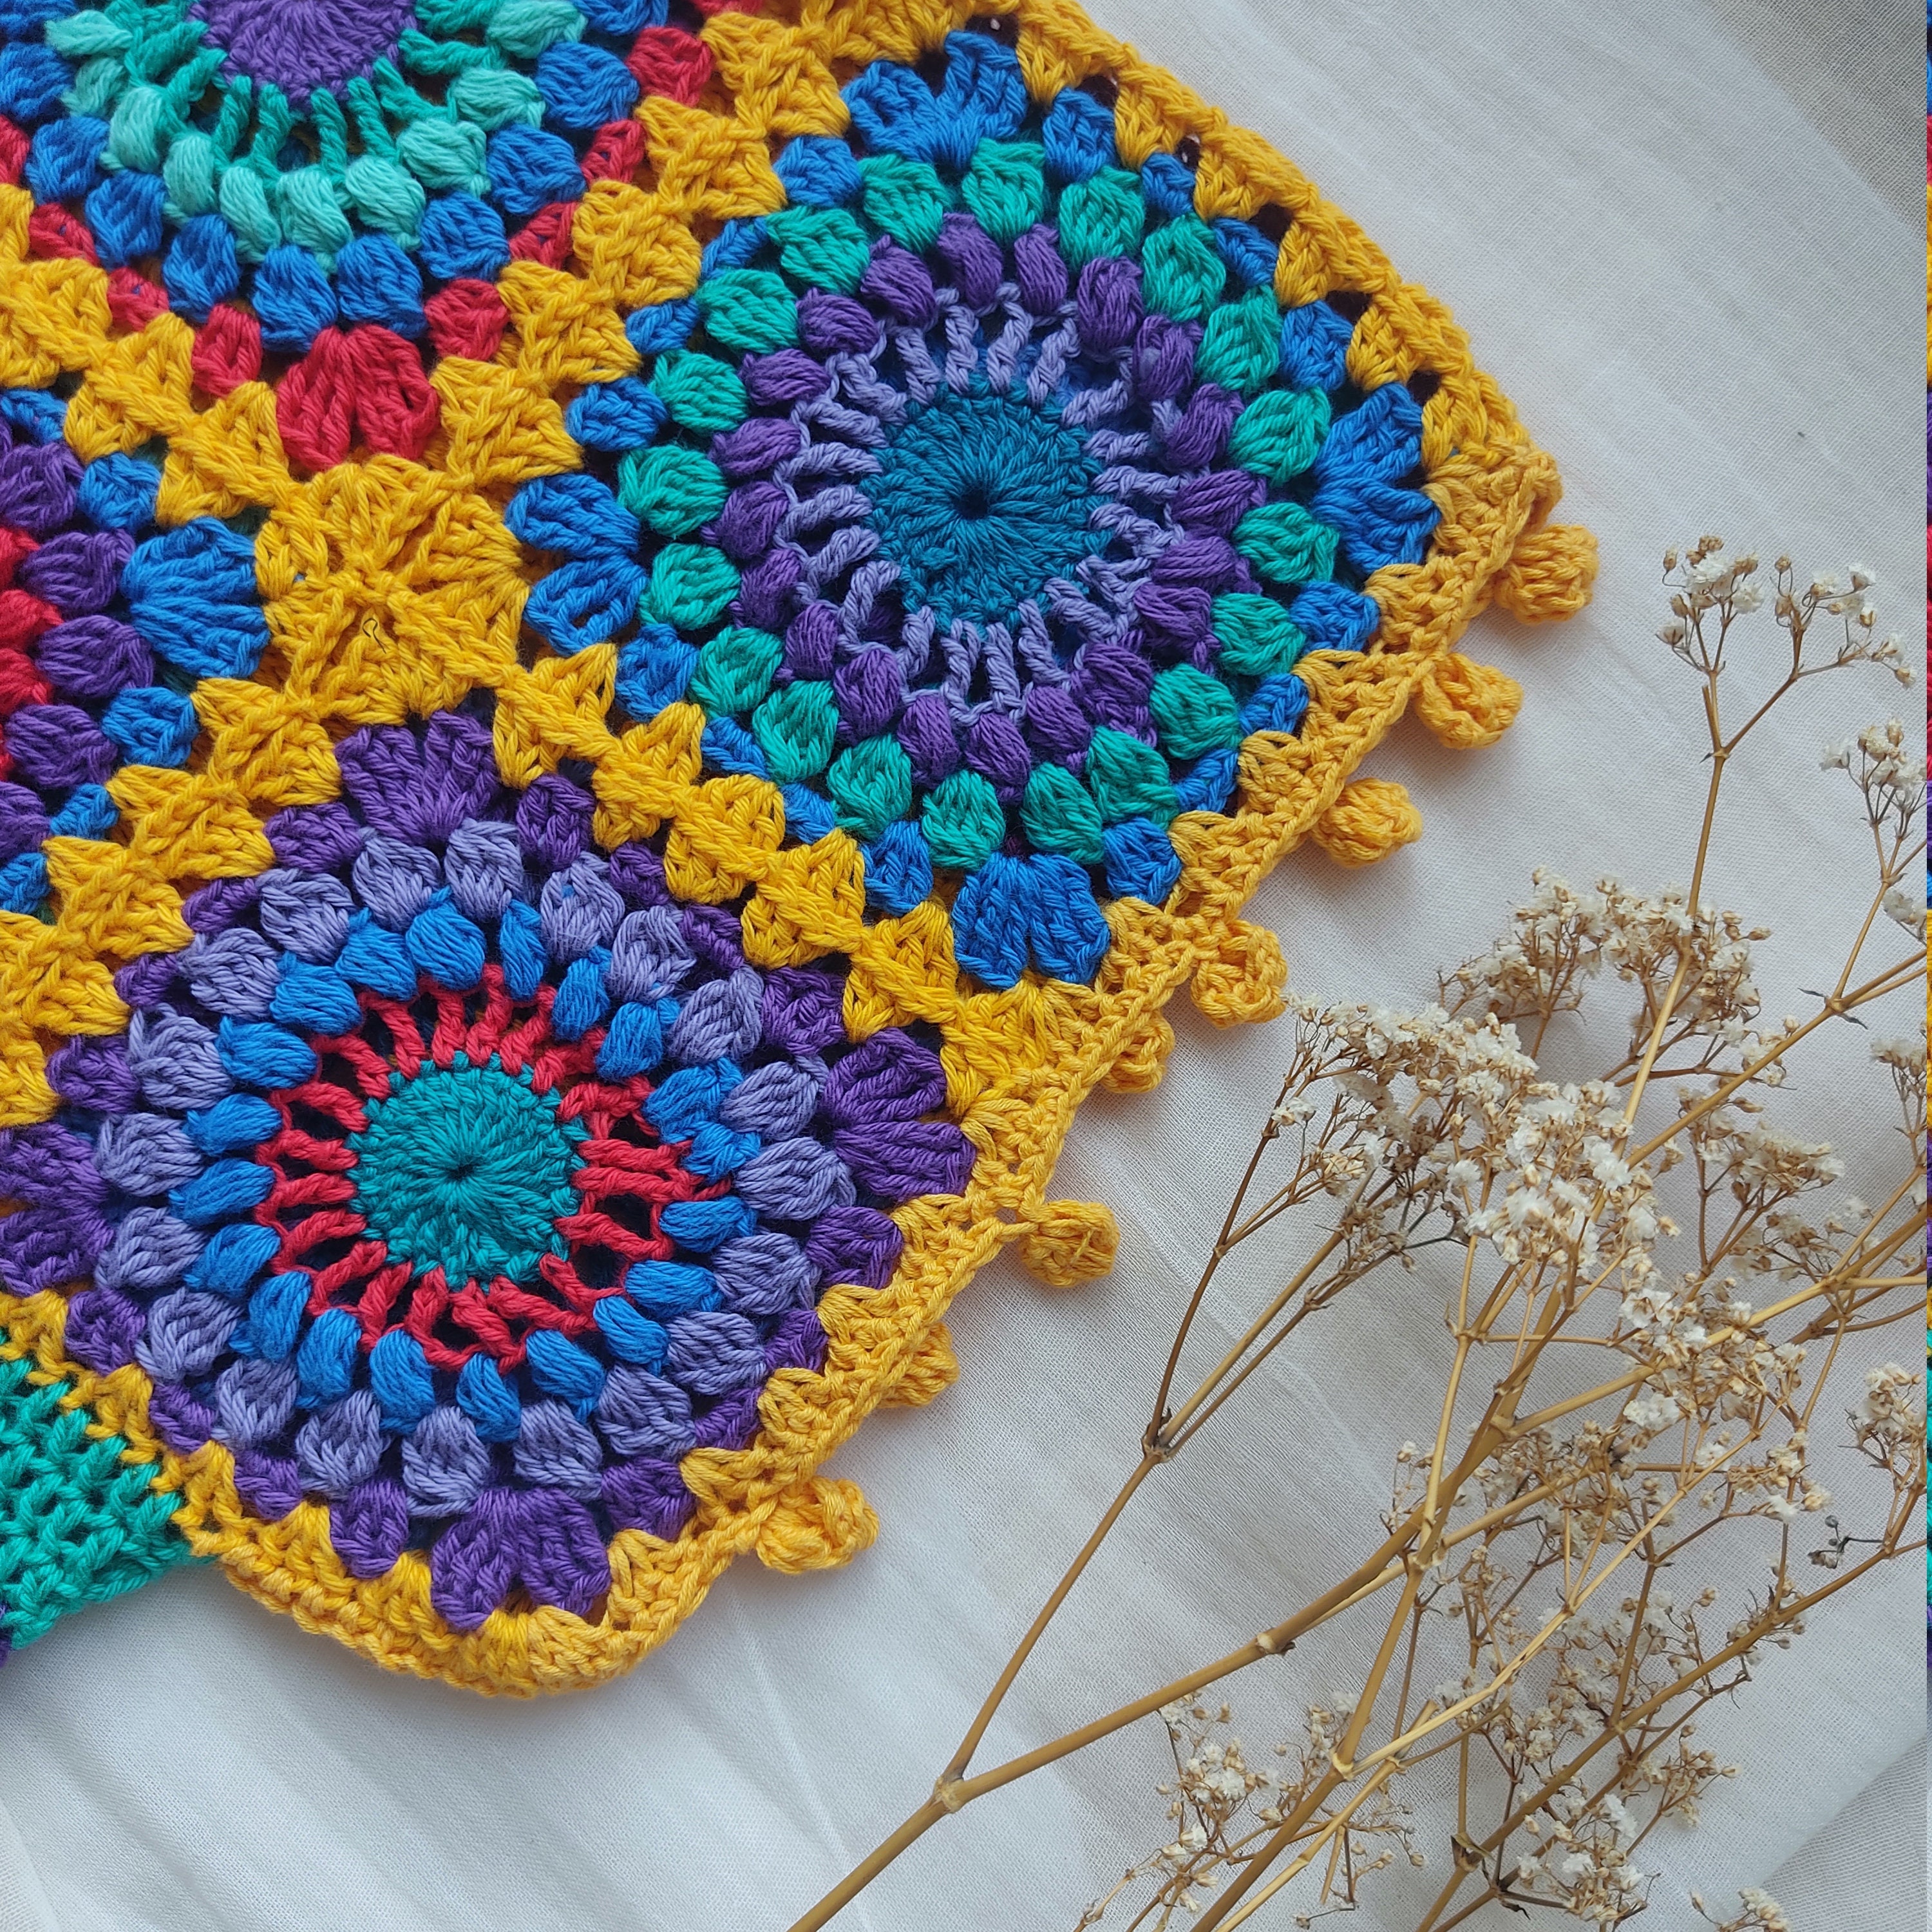 Boho Granny Square Bralette Crochet pattern by Storm & Zoe